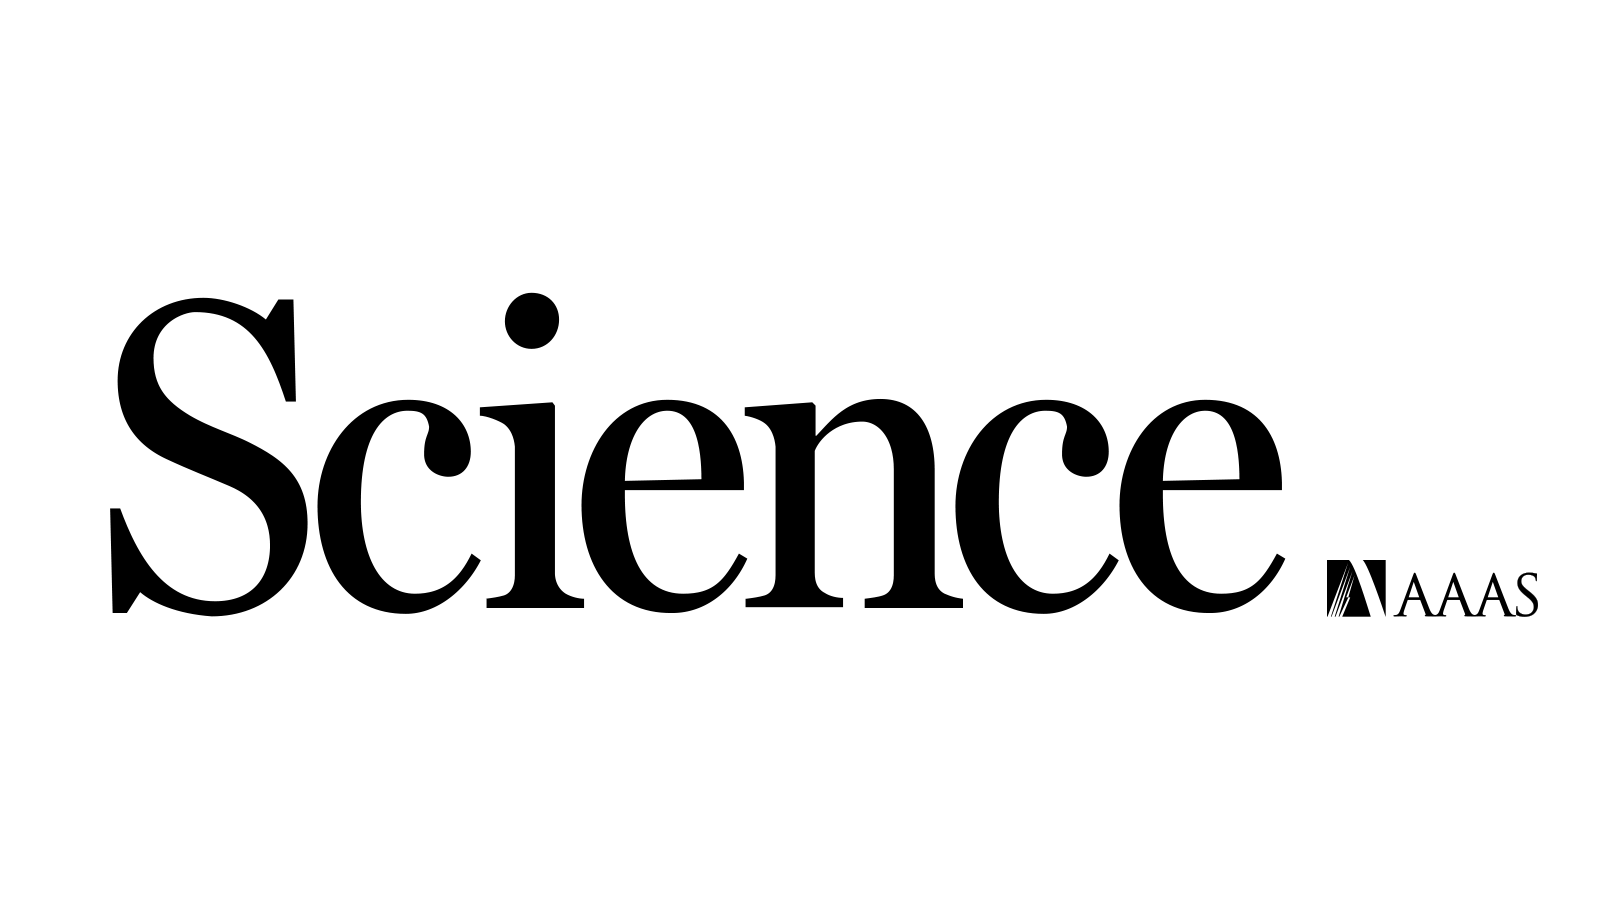 Science Magazine logo